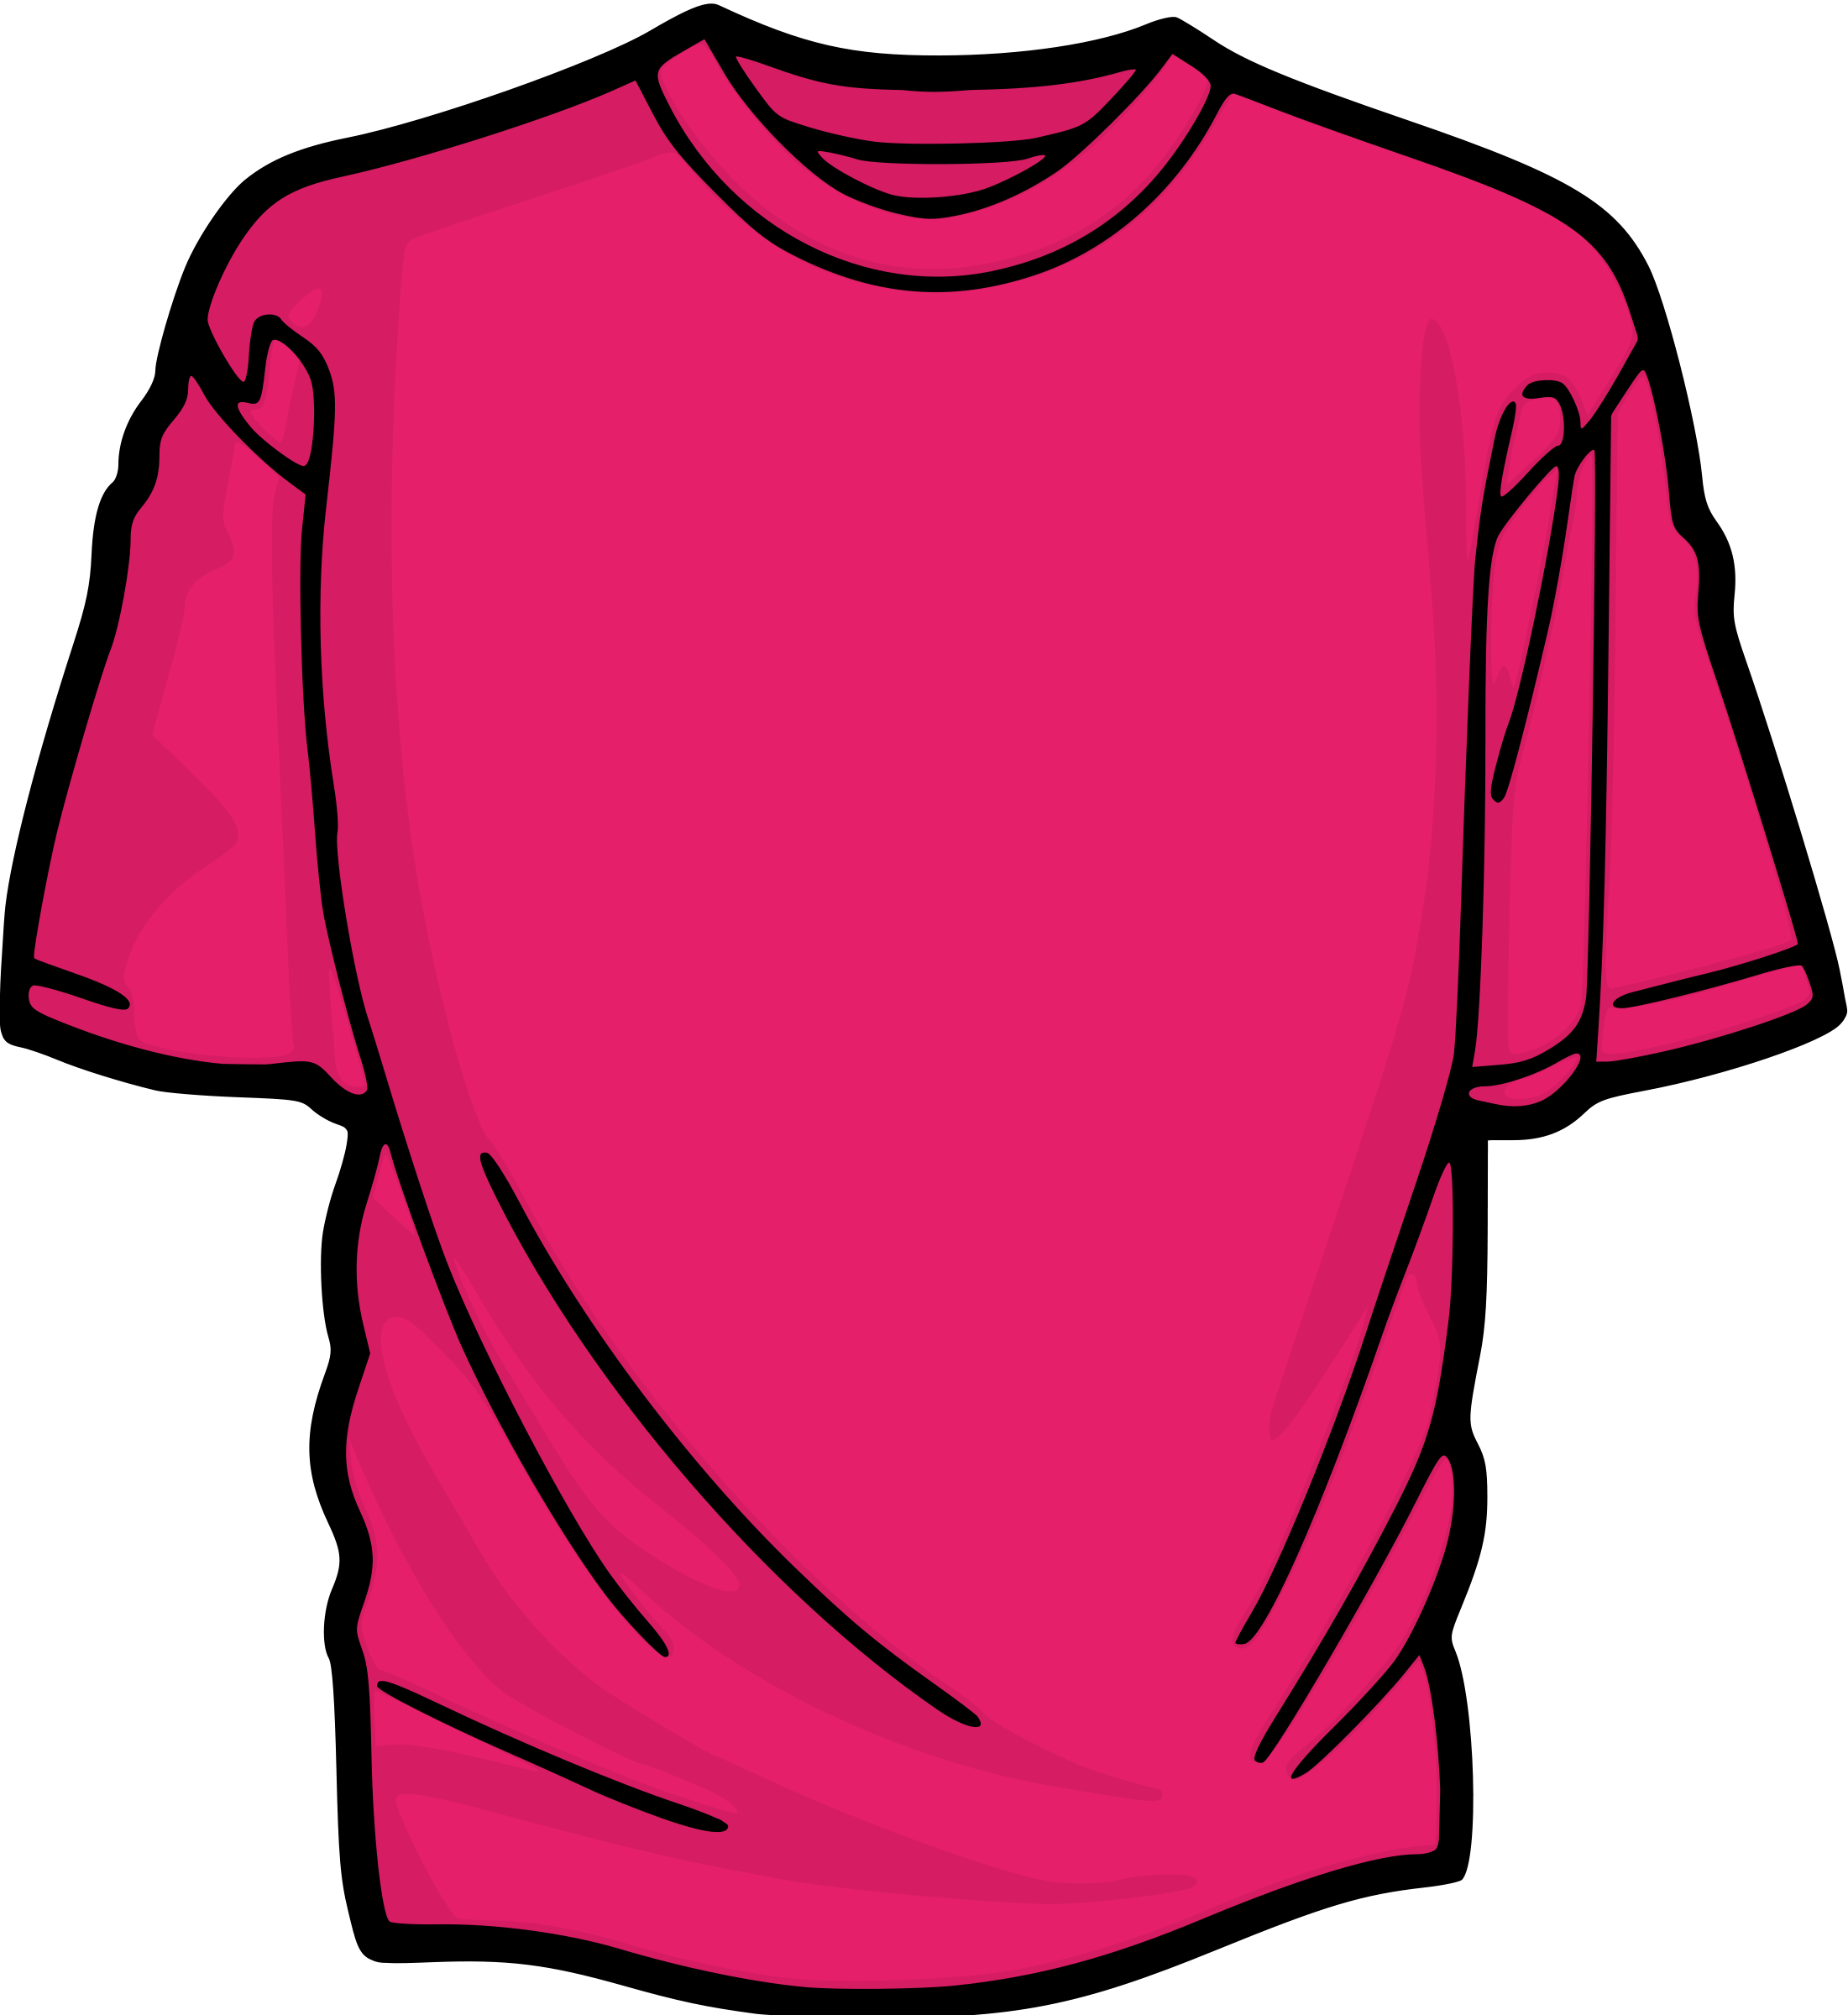 T Shirt Clip Art to Download - dbclipart.com